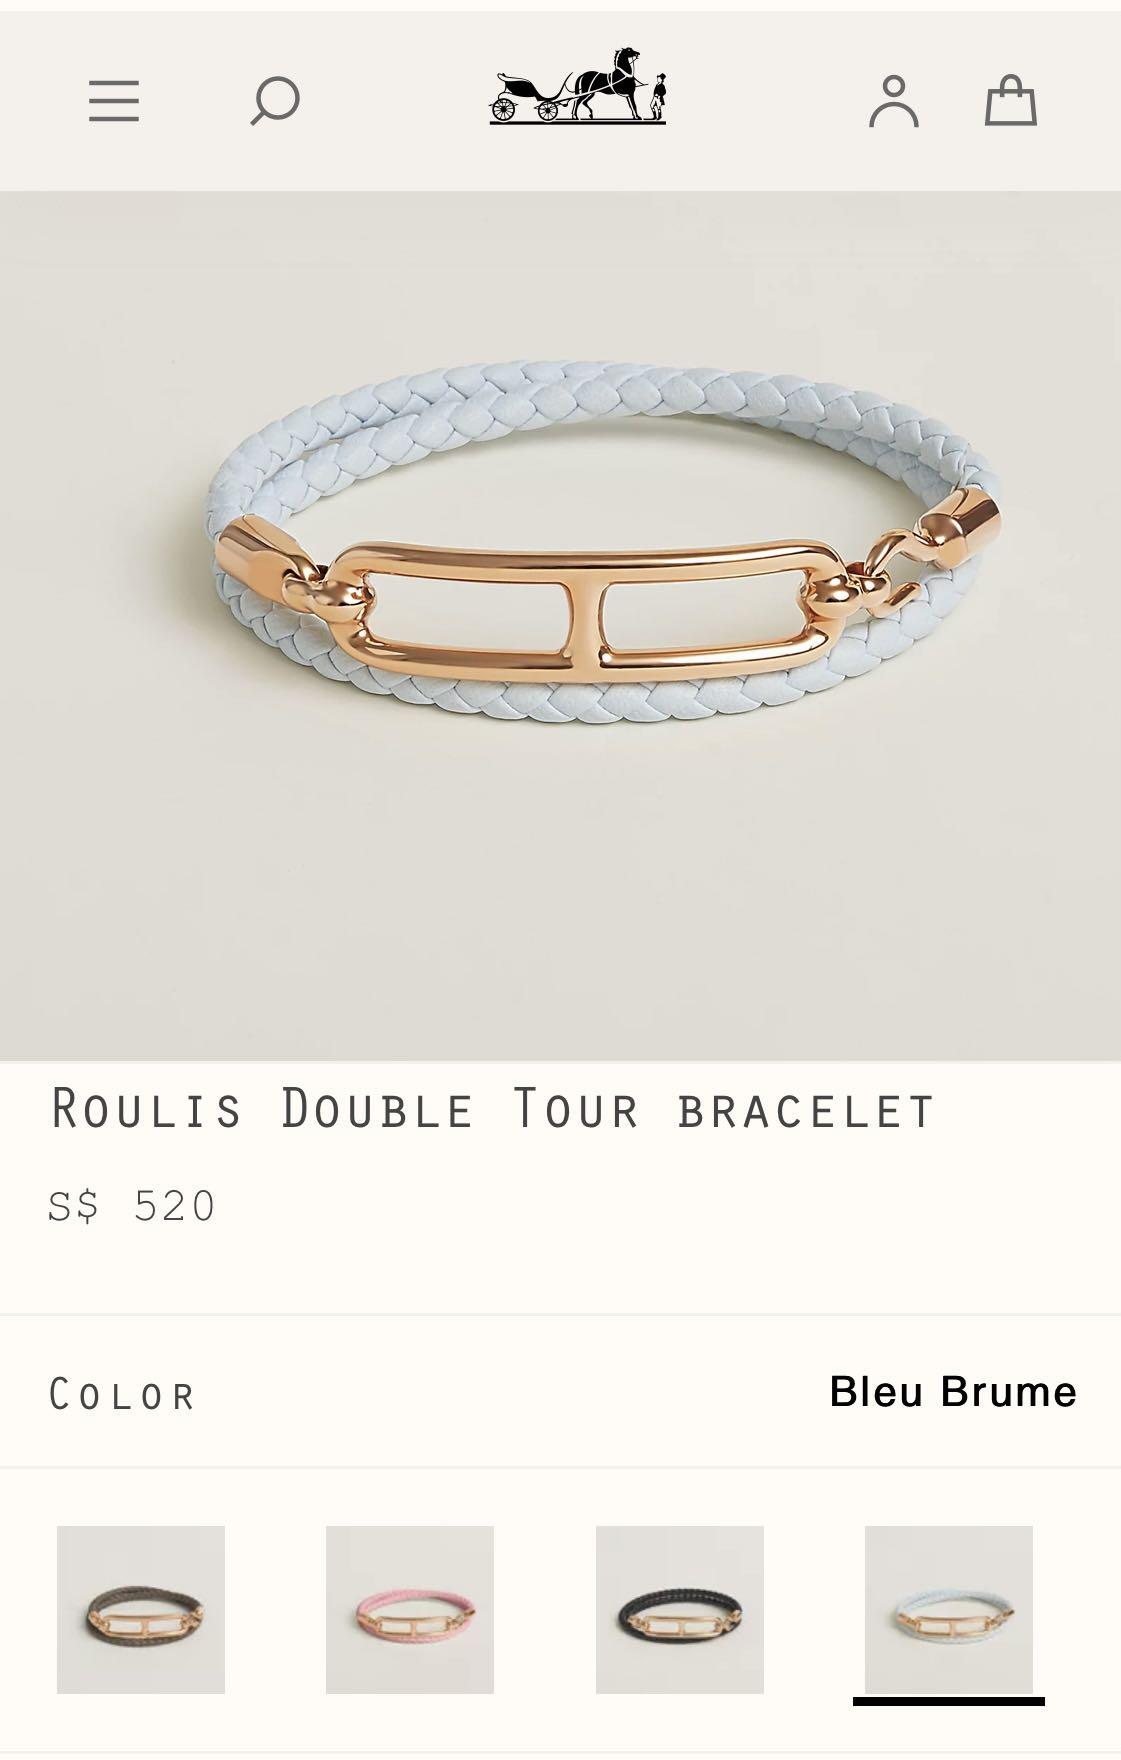 Hermes Roulis Bracelet in Bleu Brume and RGHW – Brands Lover